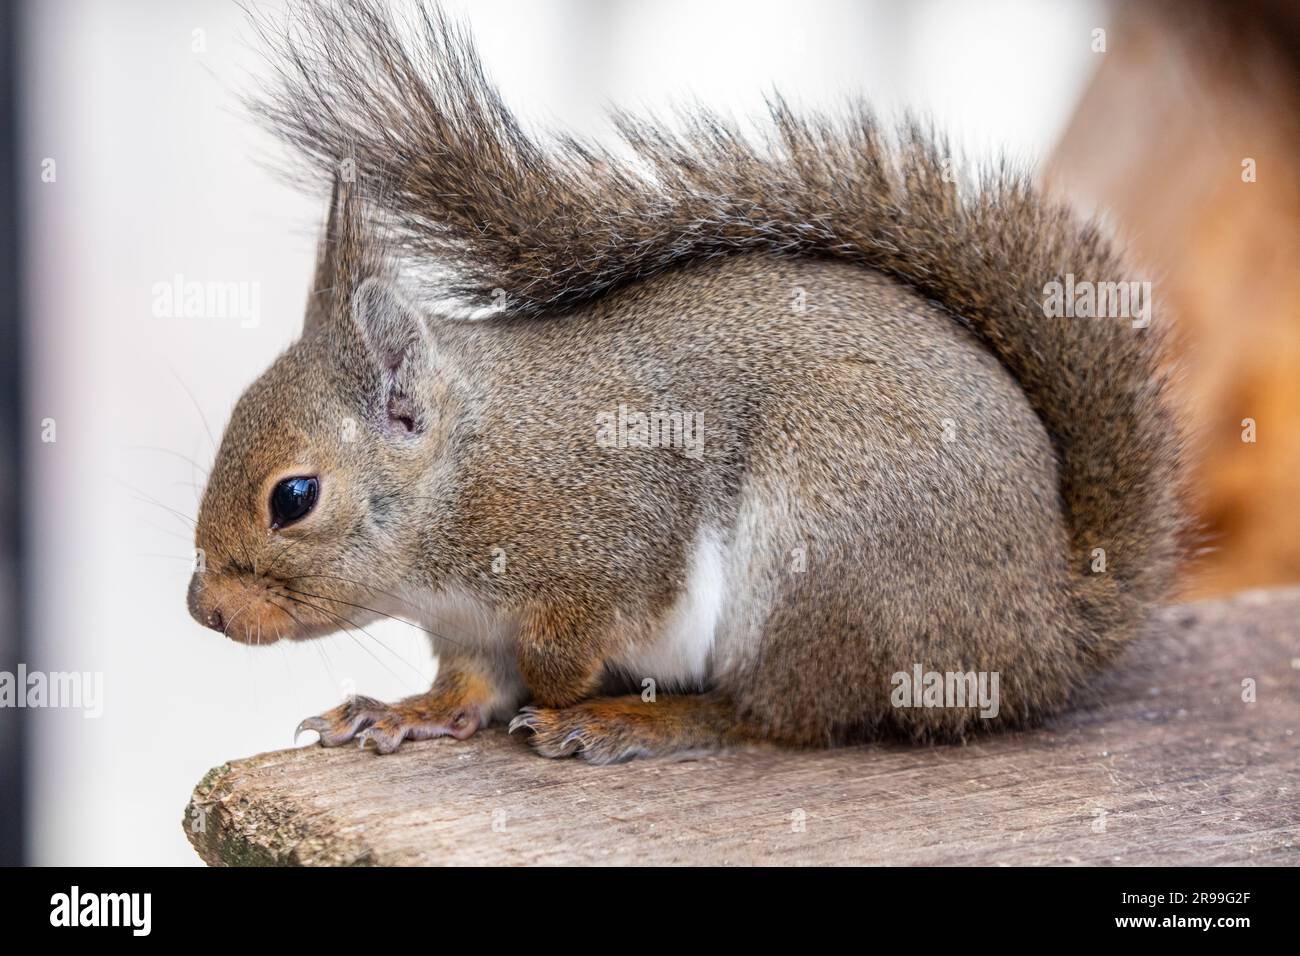 The Japanese squirrel (Sciurus lis) is a tree squirrel in the genus Sciurus endemic to Japan. Stock Photo